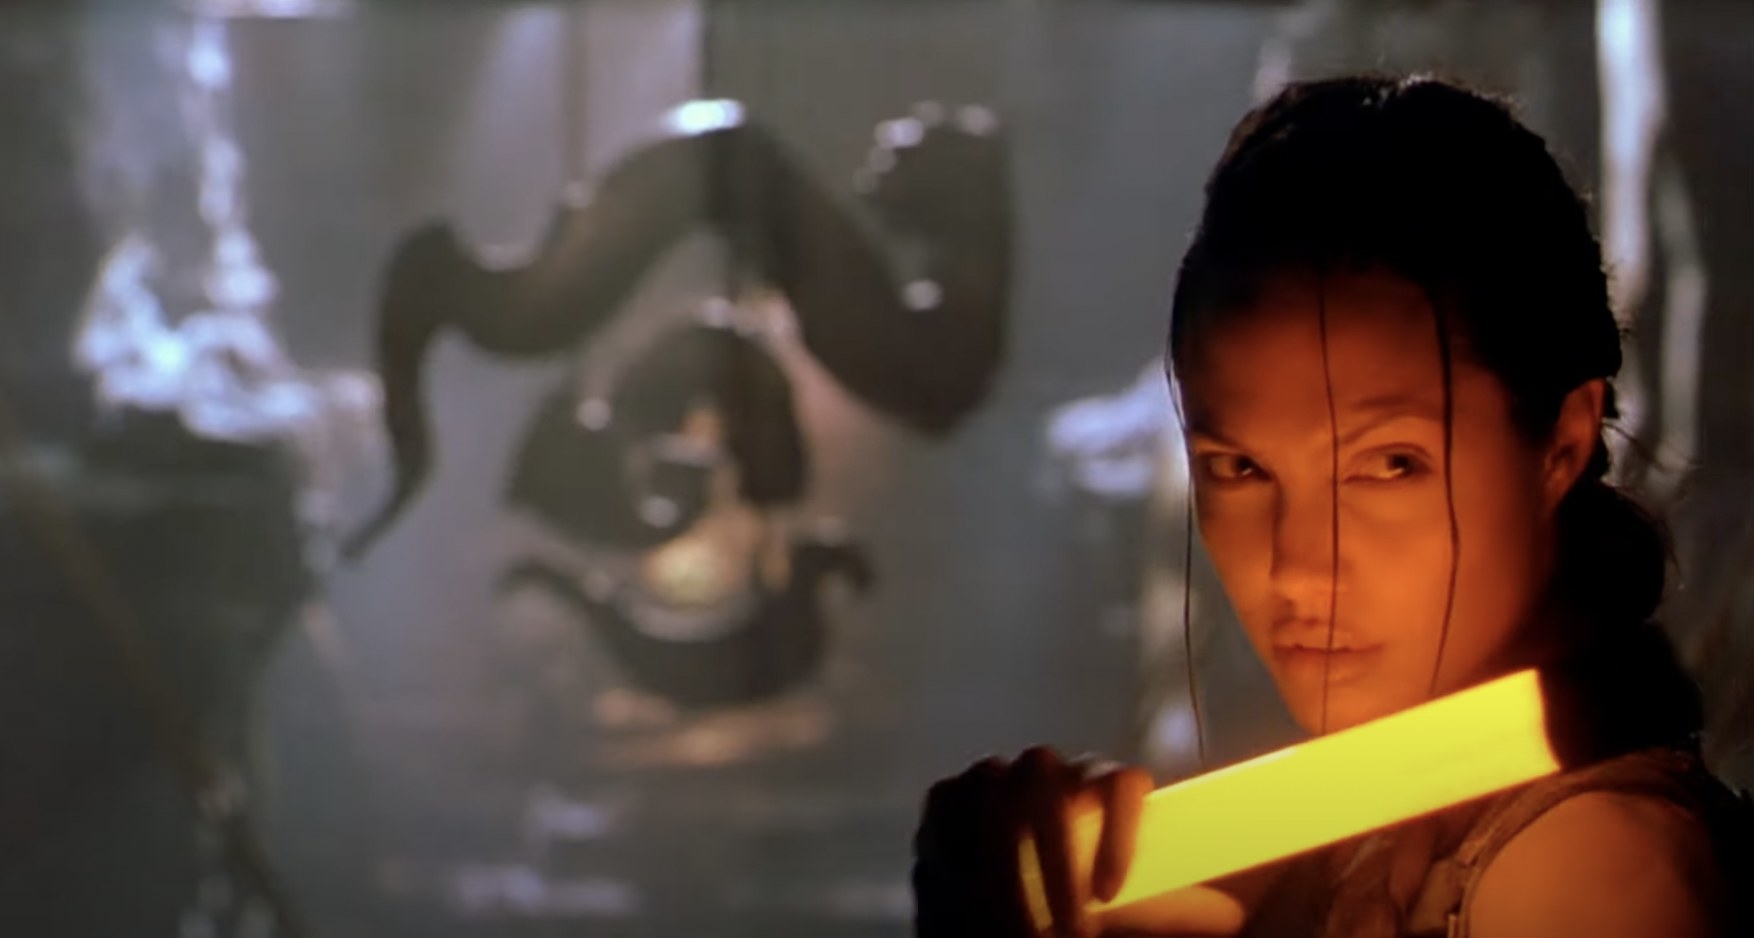 Lara Croft uses a glow stick light in a cave